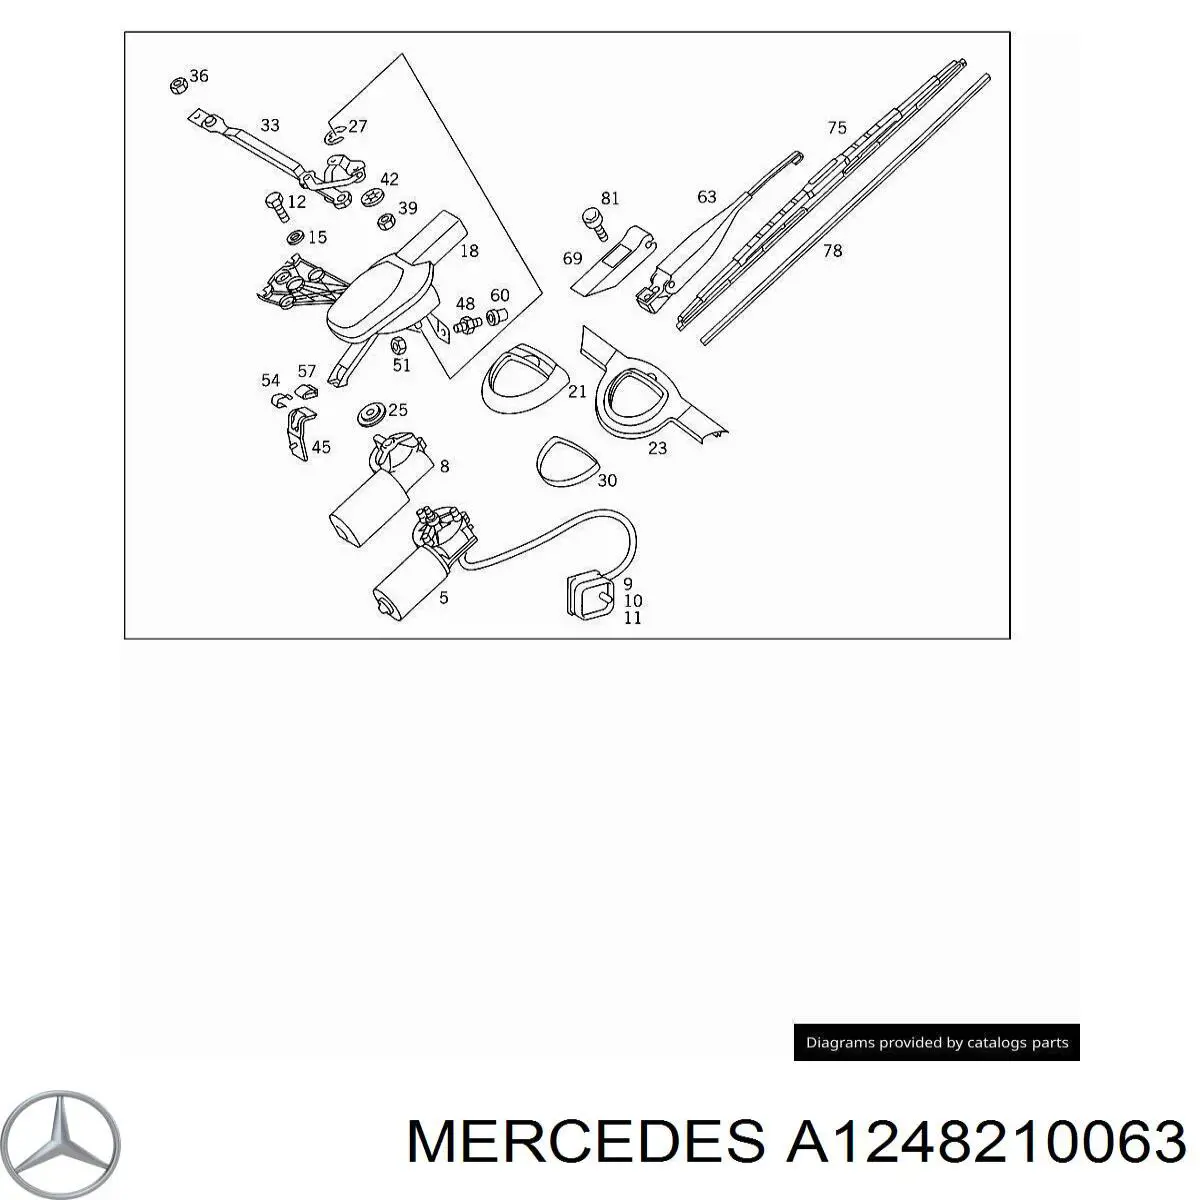 A1248210063 Mercedes